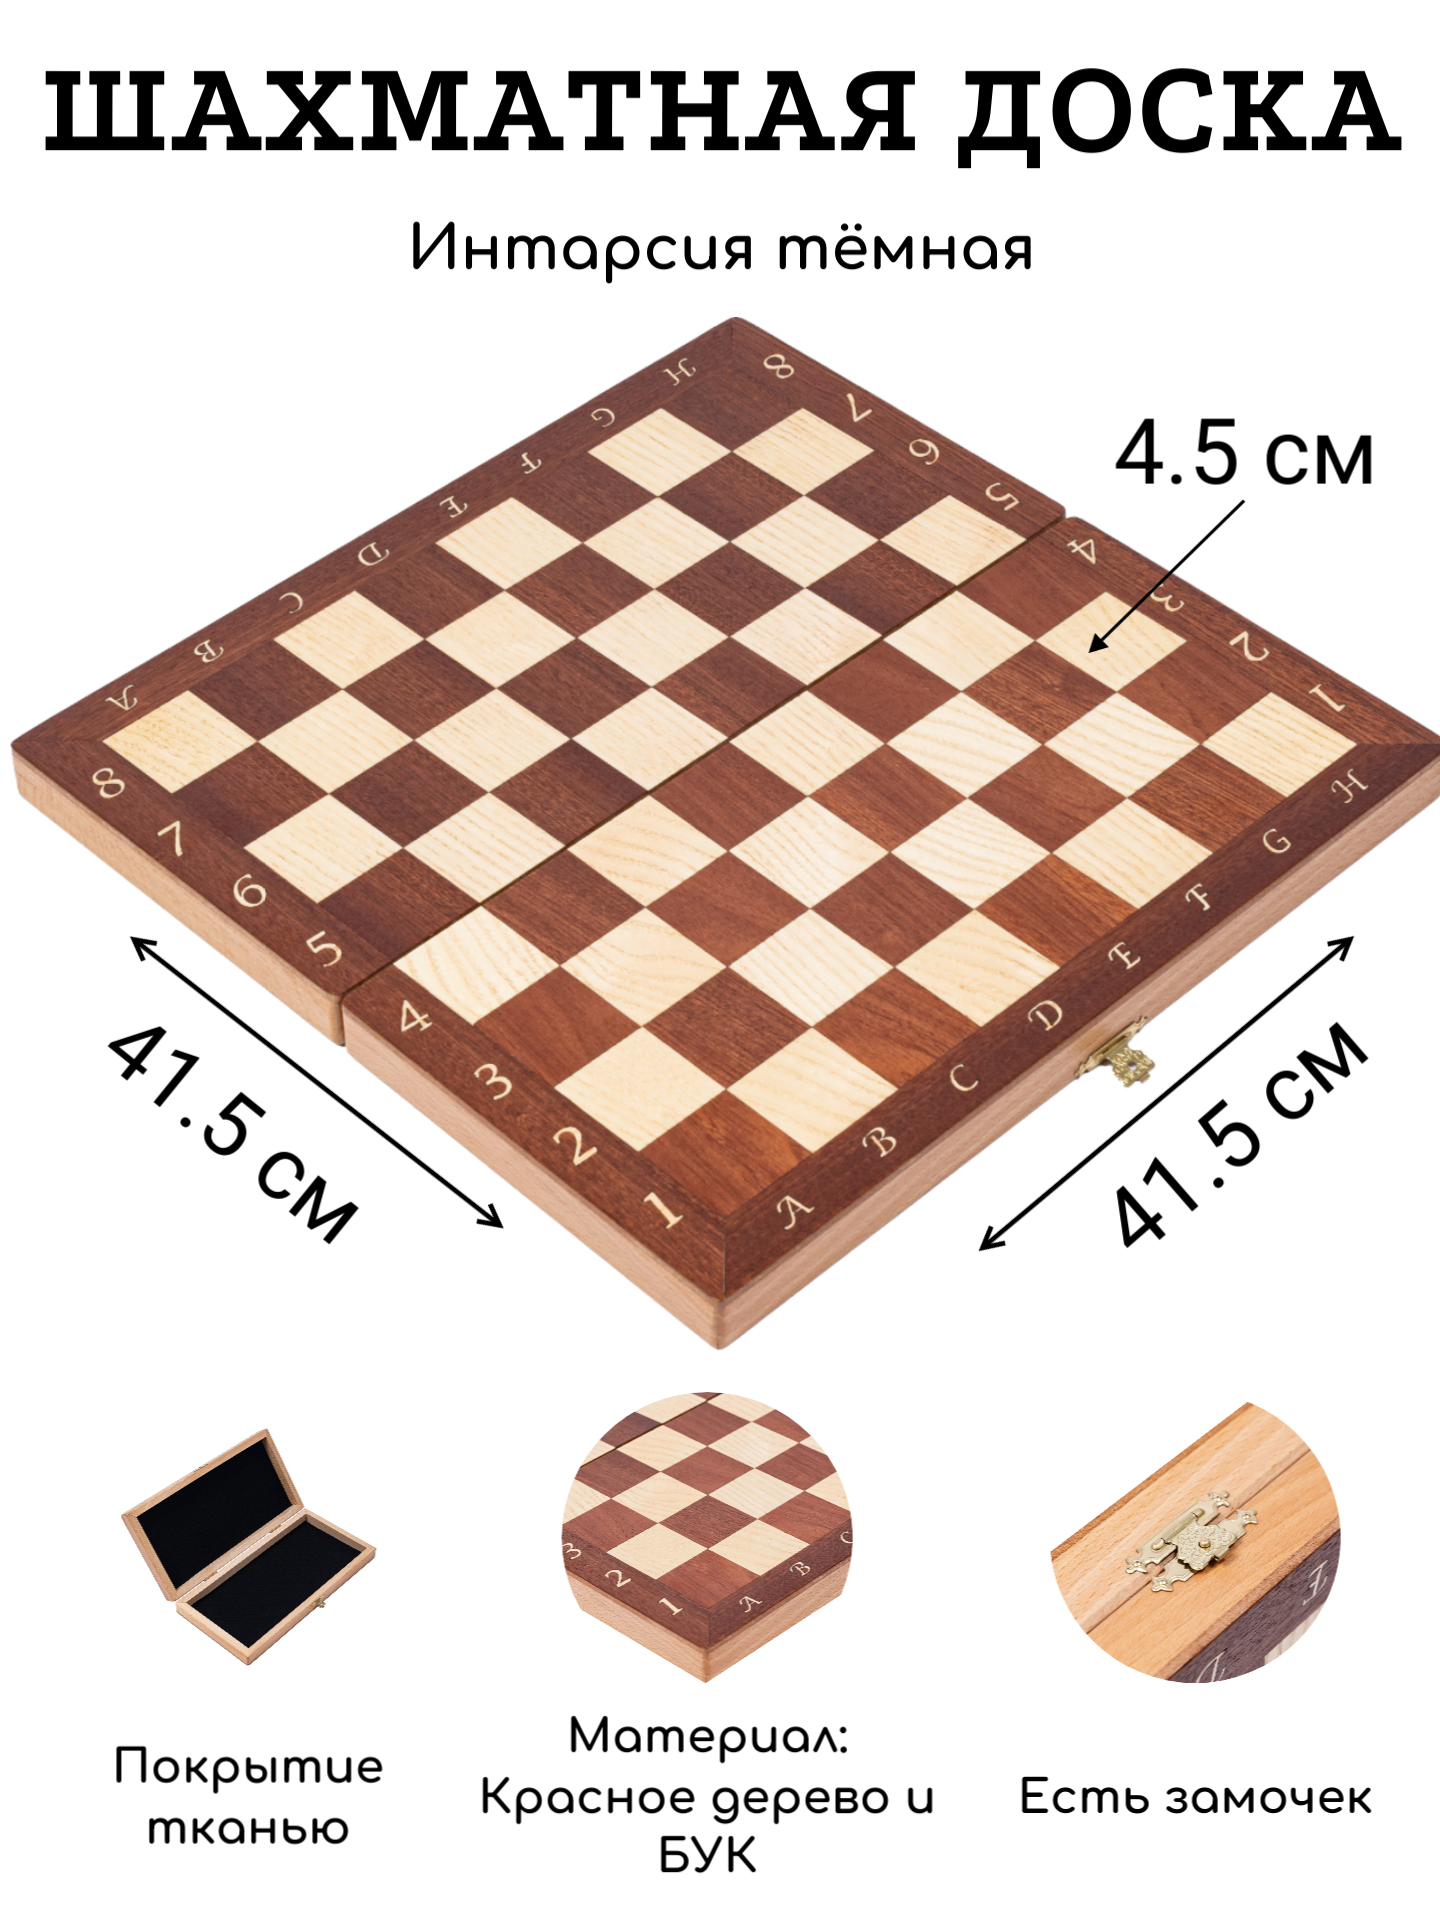 Шахматная доска без фигур Lavochkashop Турнирная 41 5 см интарсия stav041 шахматная доска обиходная 29 х 29 х 3 5 см